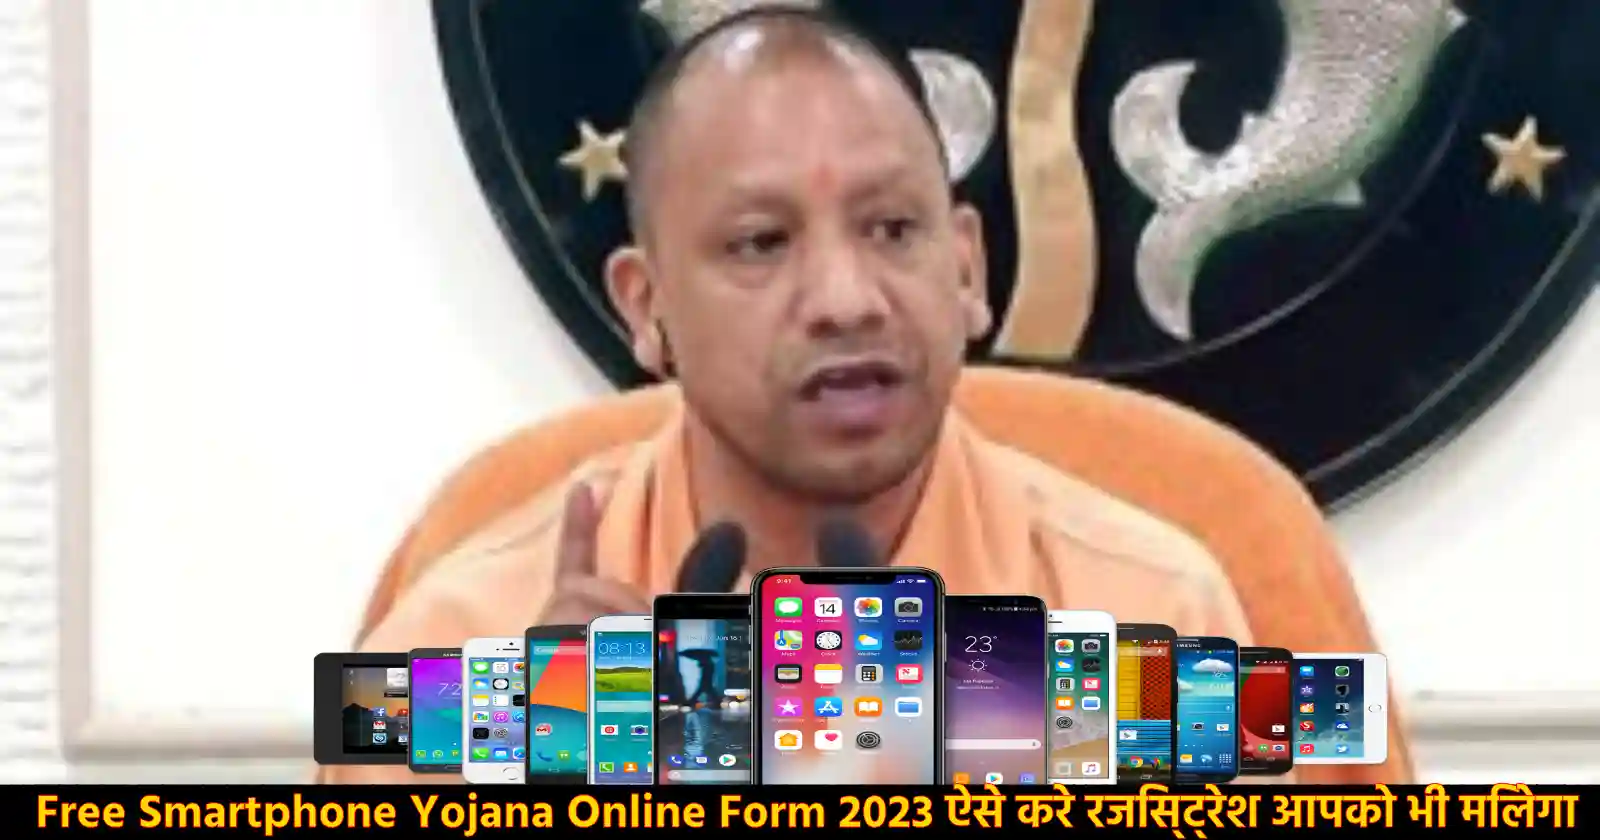 Free Smartphone Yojana Online Form 2023 ऐसे करे रजिस्ट्रेश आपको भी मिलेगा